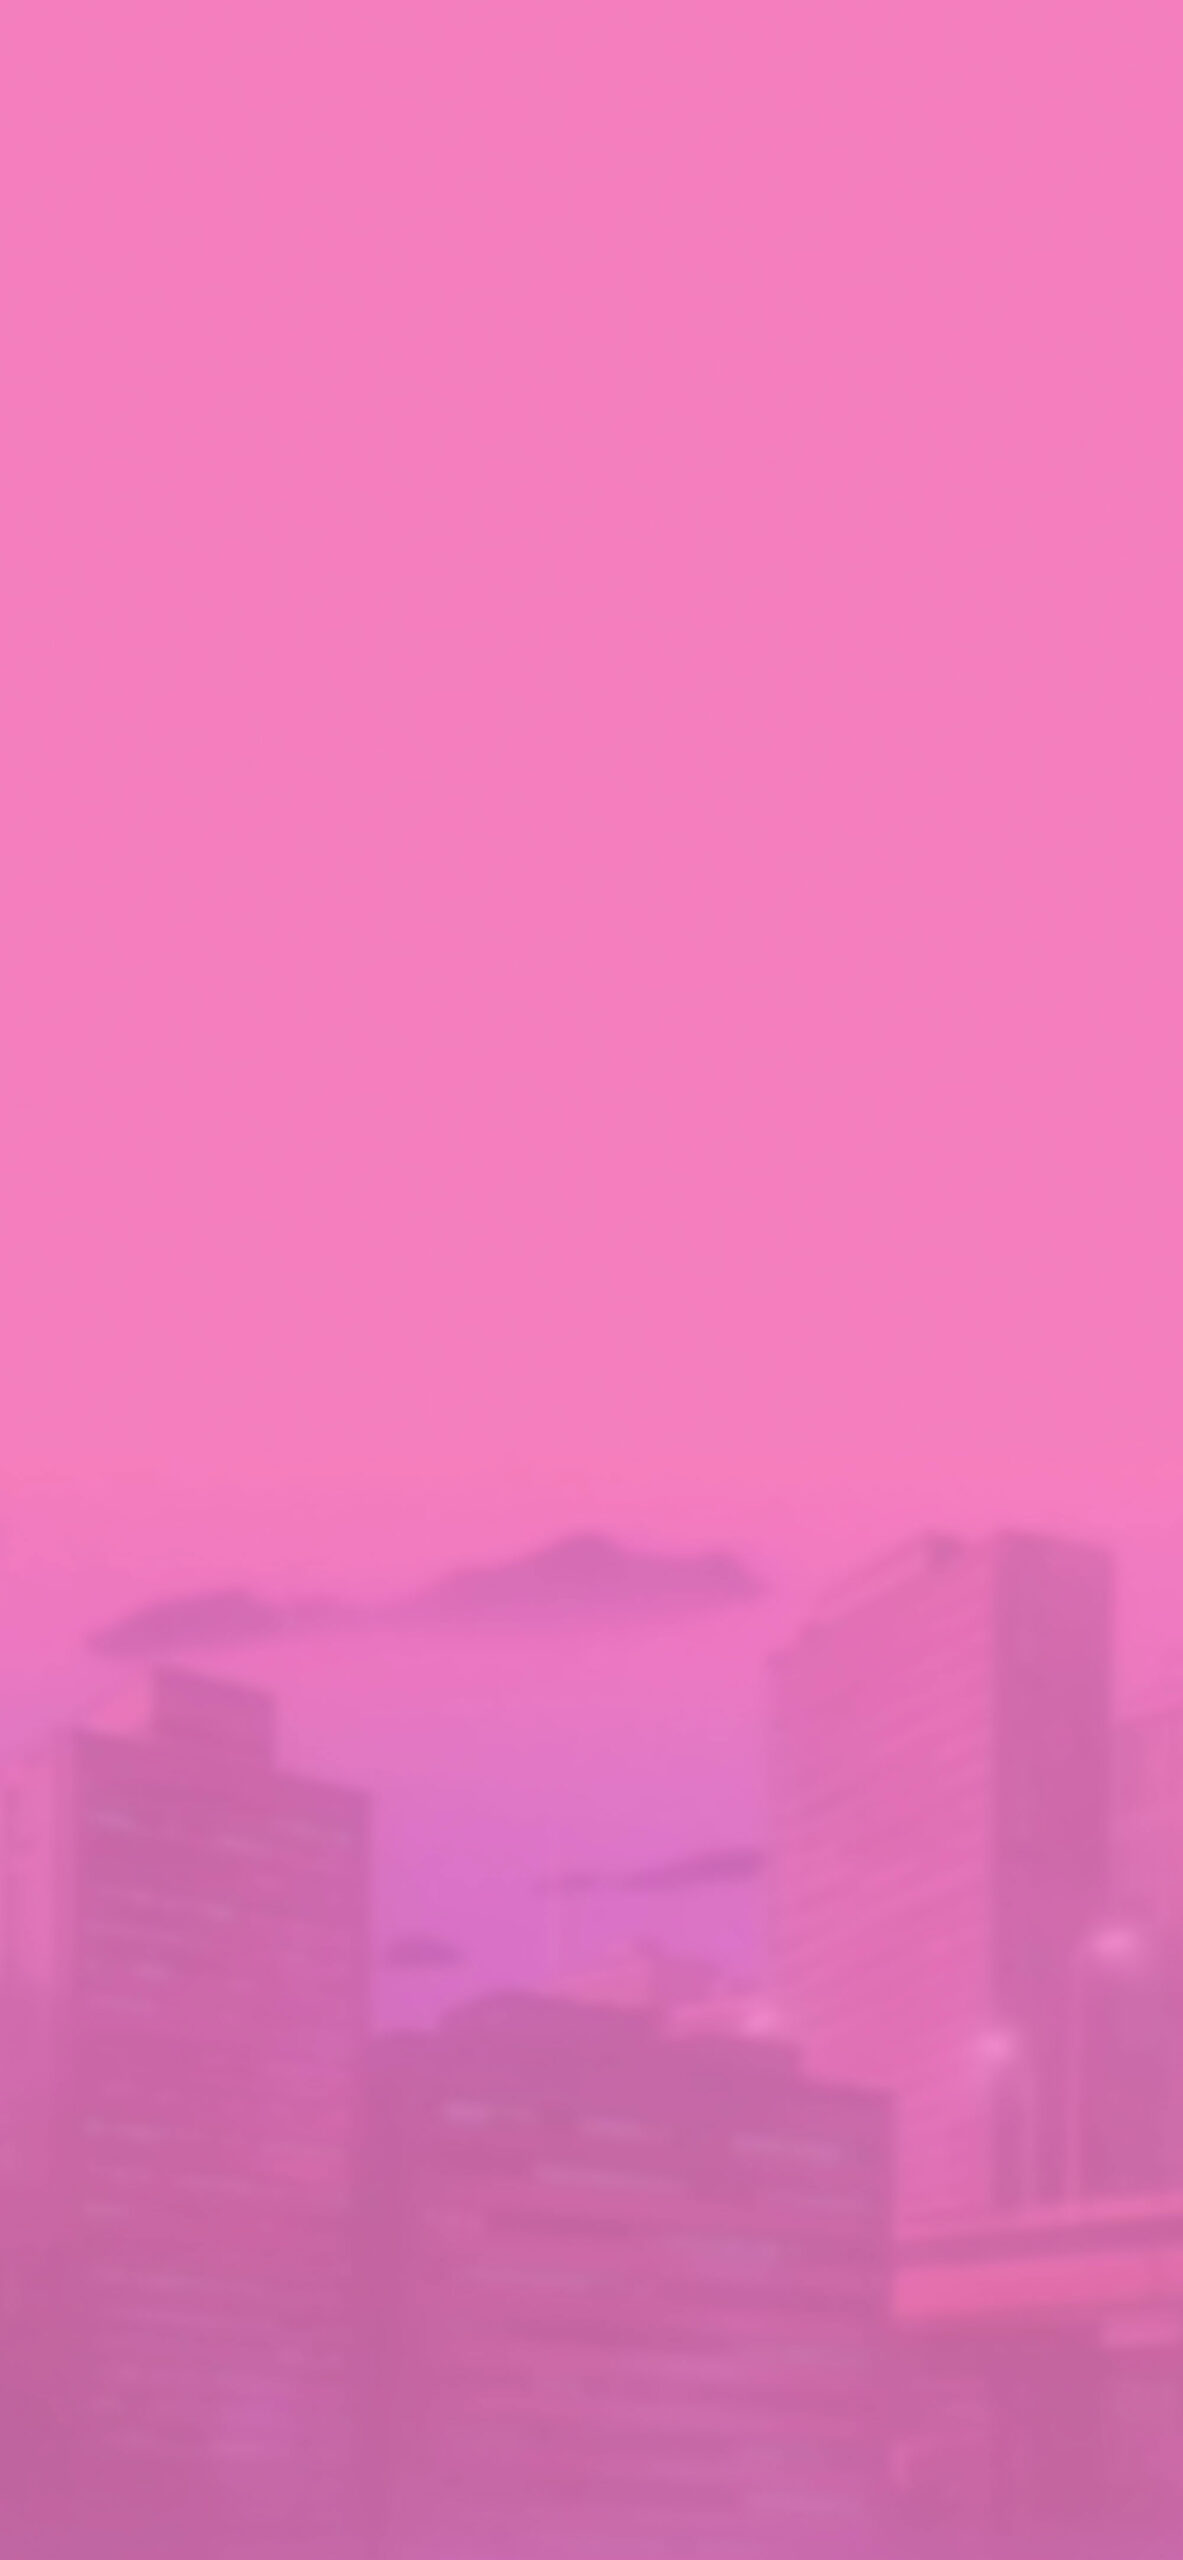 aesthetic pink wallpaper 2